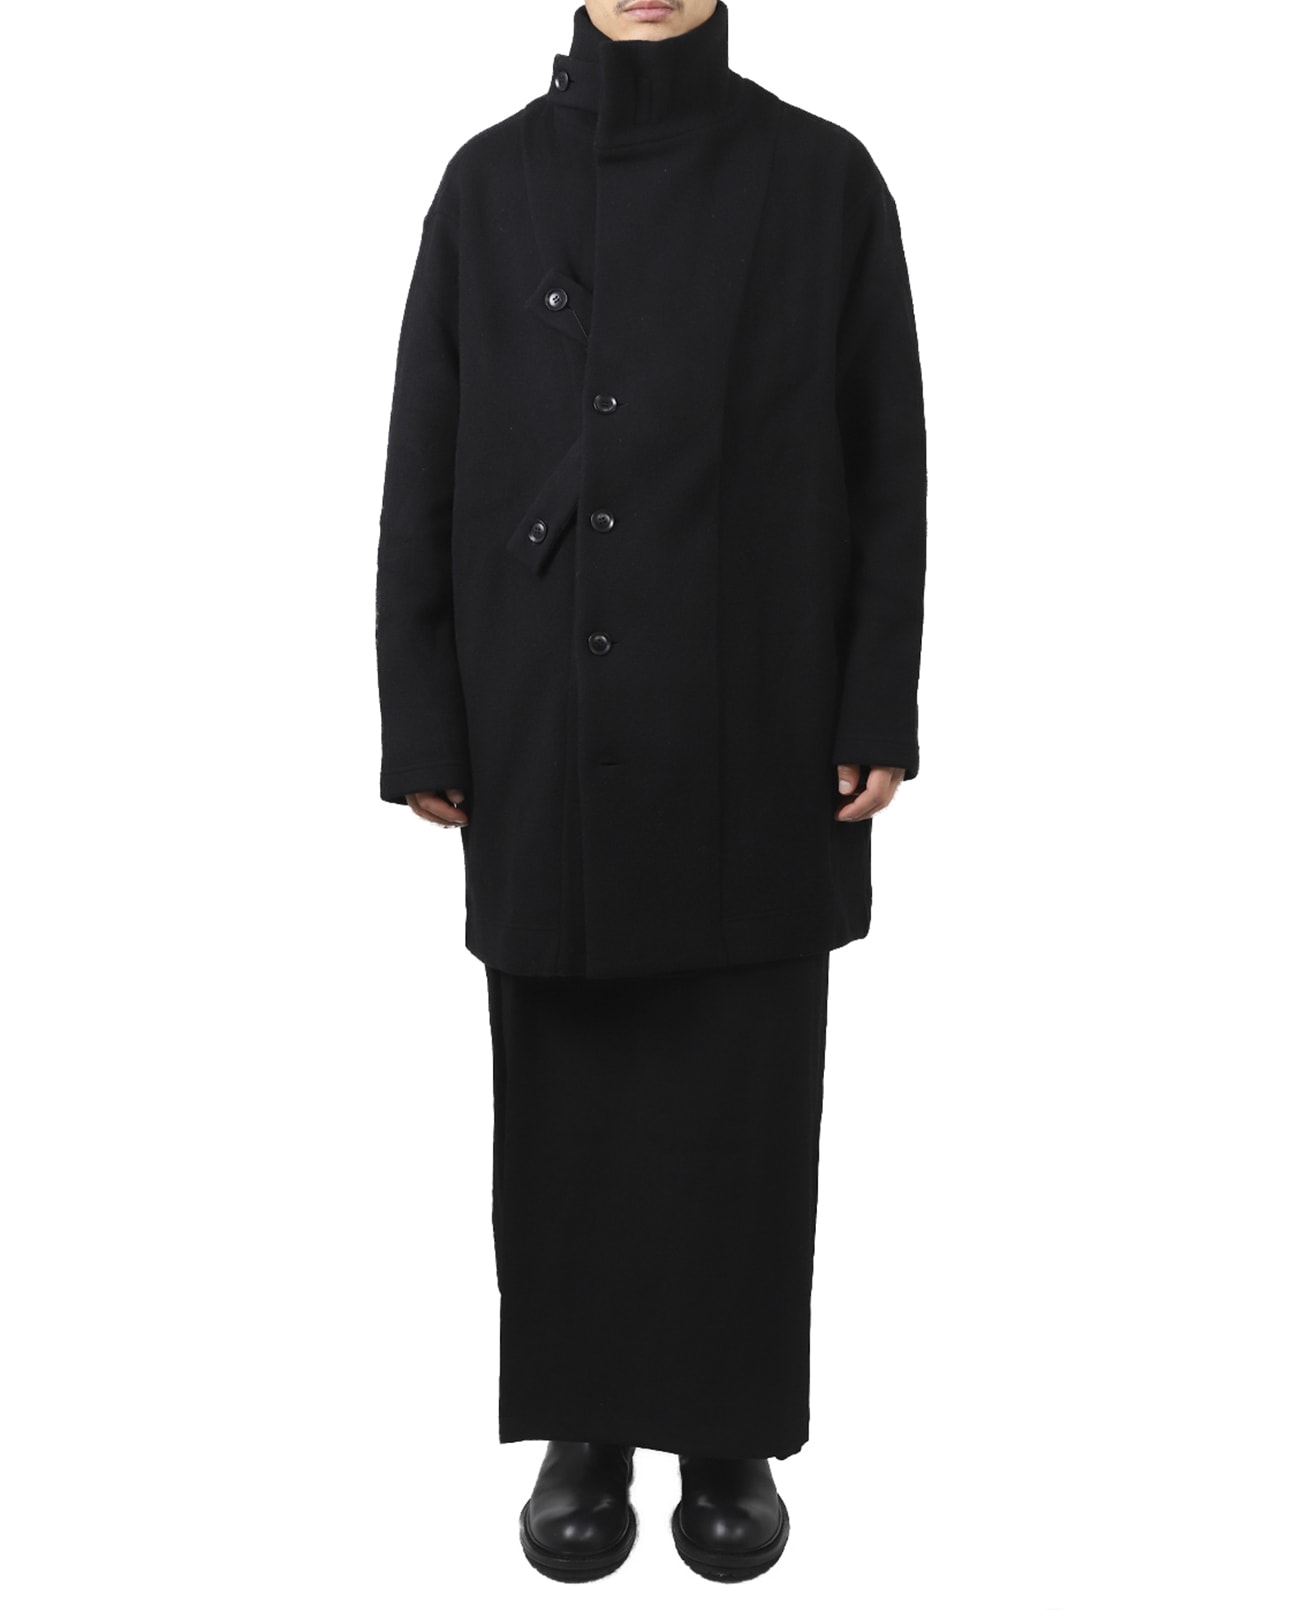 Yohji Yamamoto Black Tab Coat